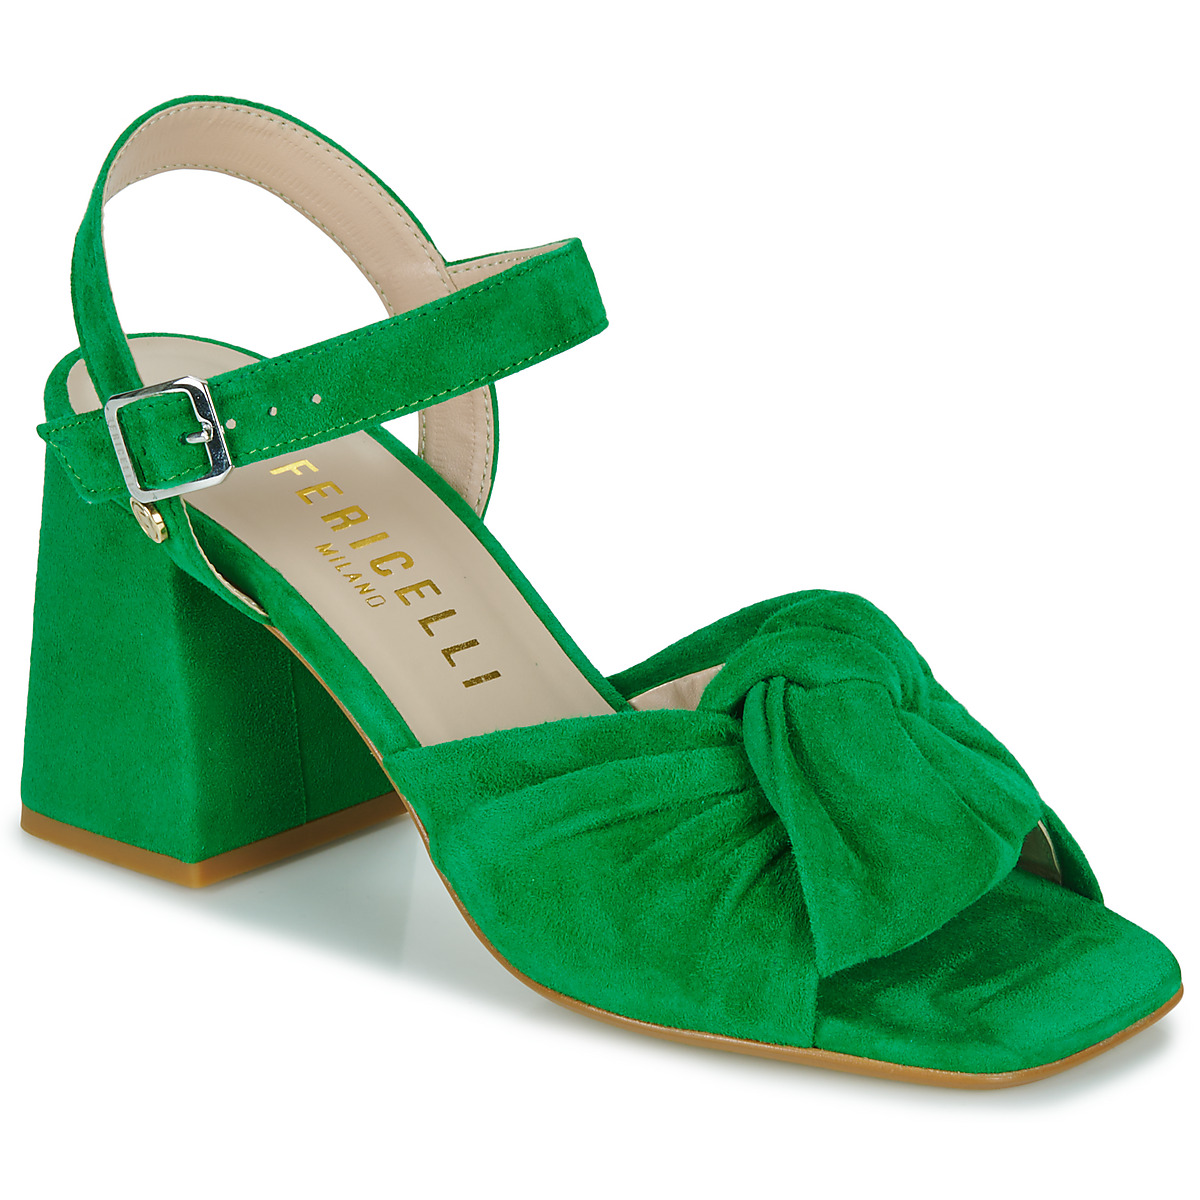 Schoenen Dames Sandalen / Open schoenen Fericelli New 10 Groen